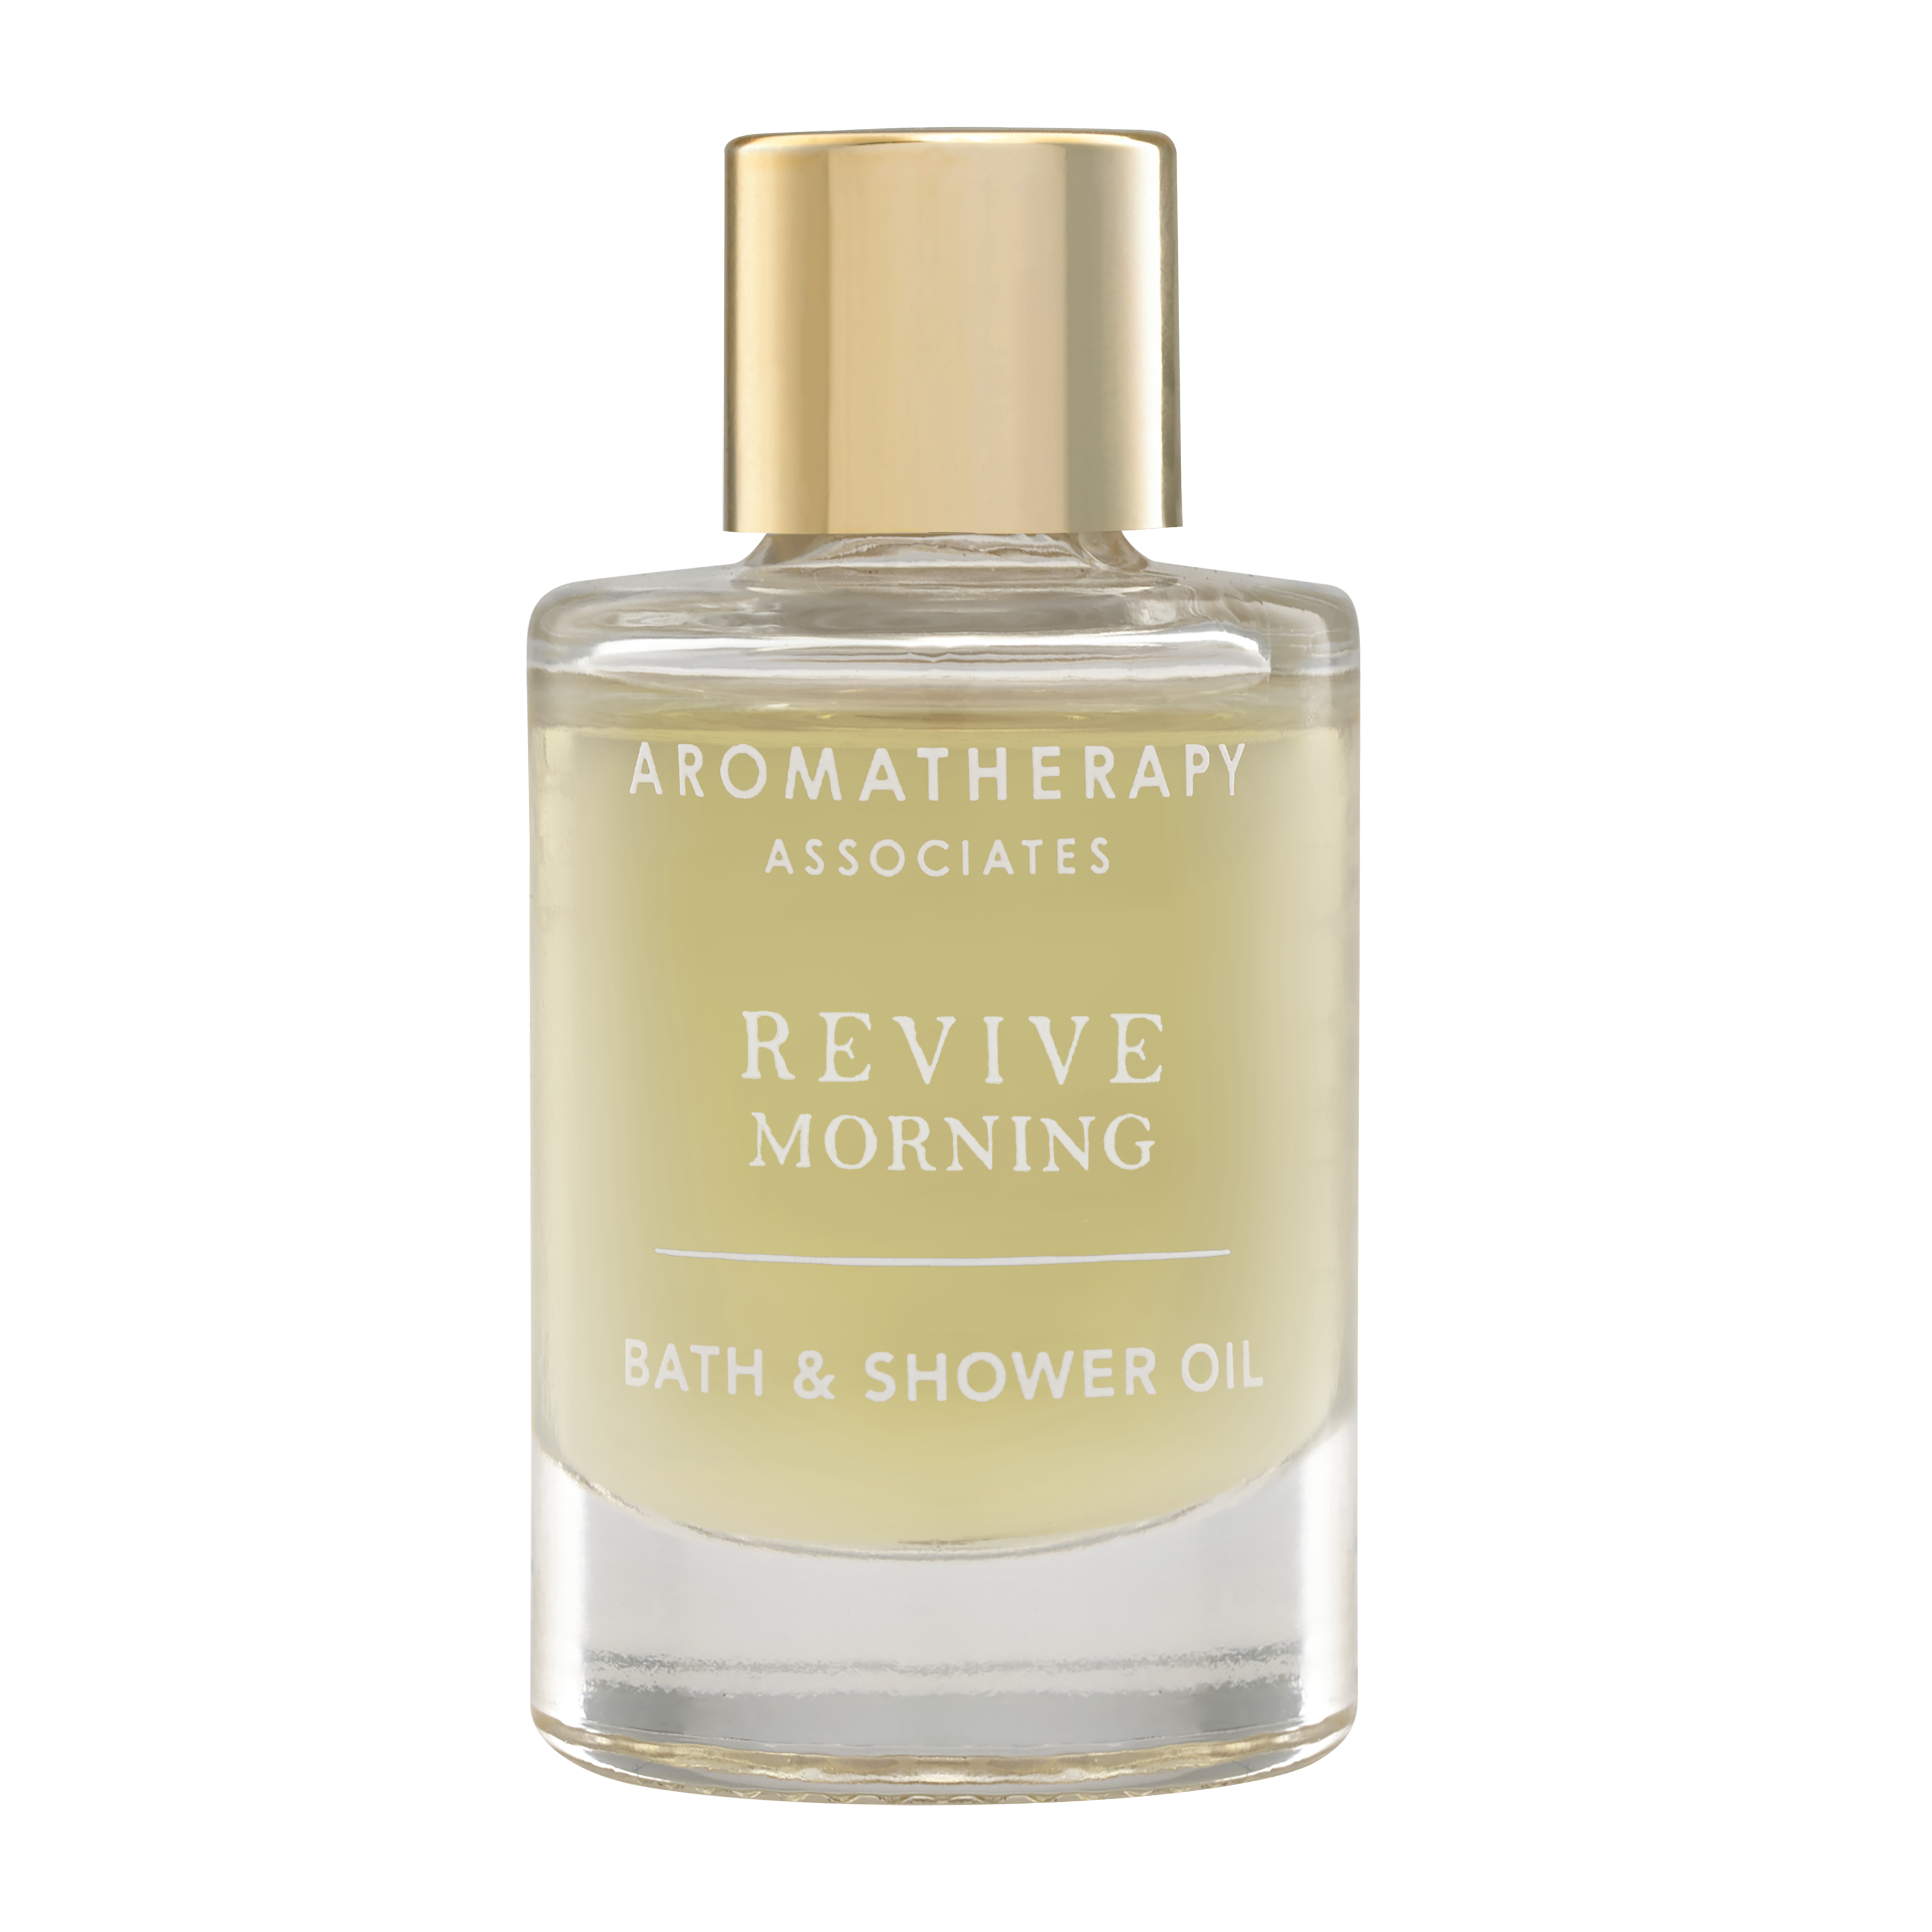 Revive Morning Bath & Shower Oil 9ml Aromatherapy Associates